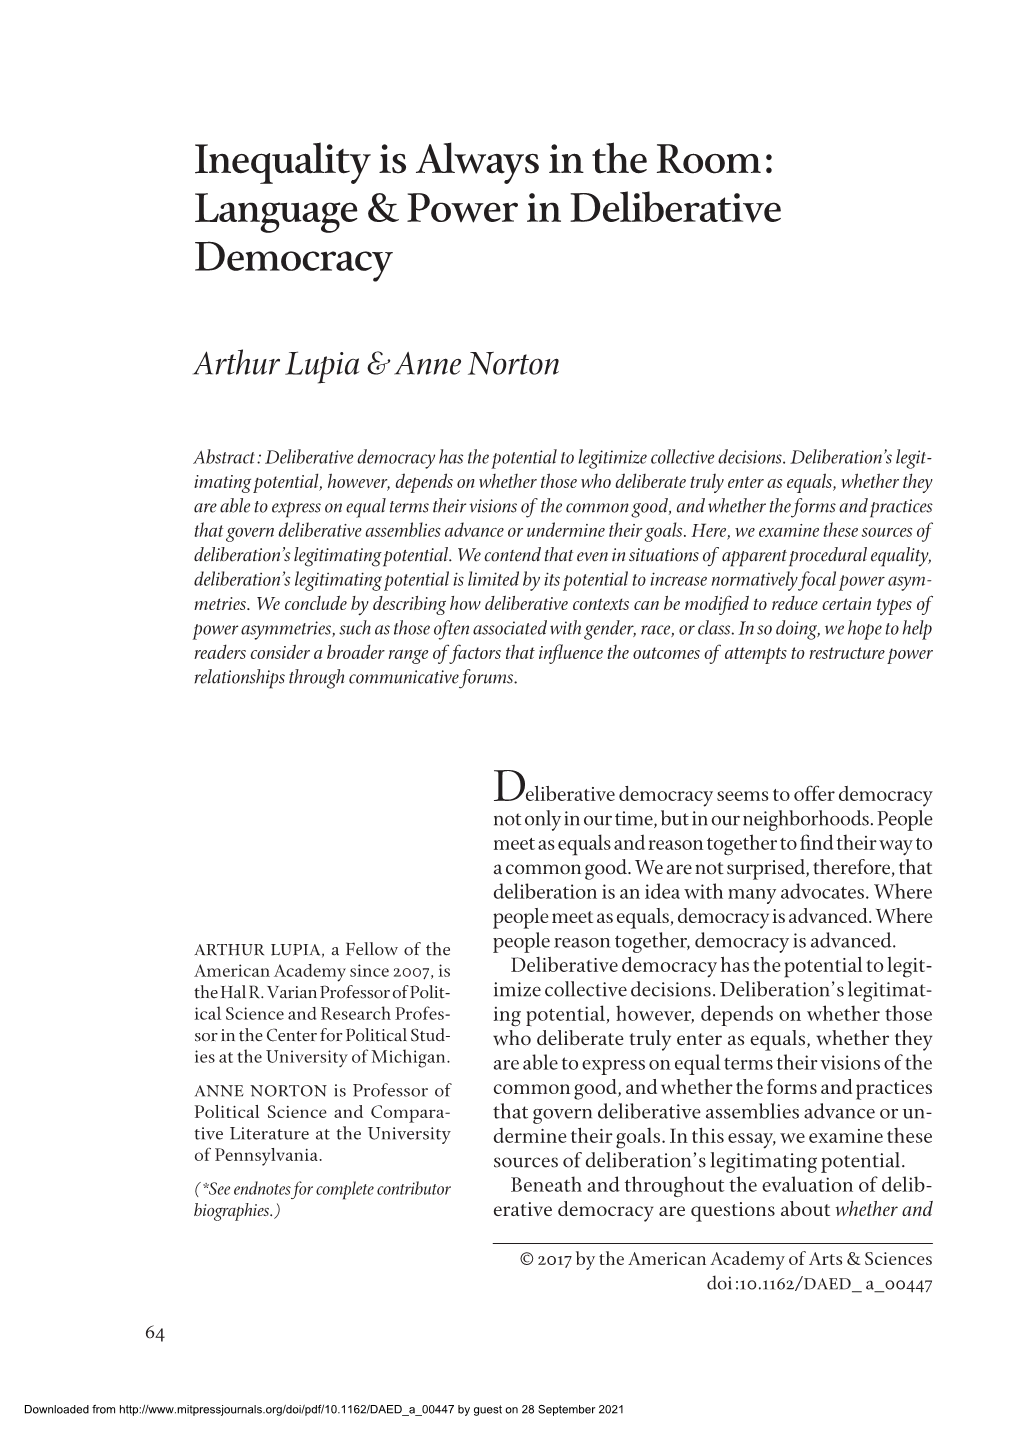 Language & Power in Deliberative Democracy